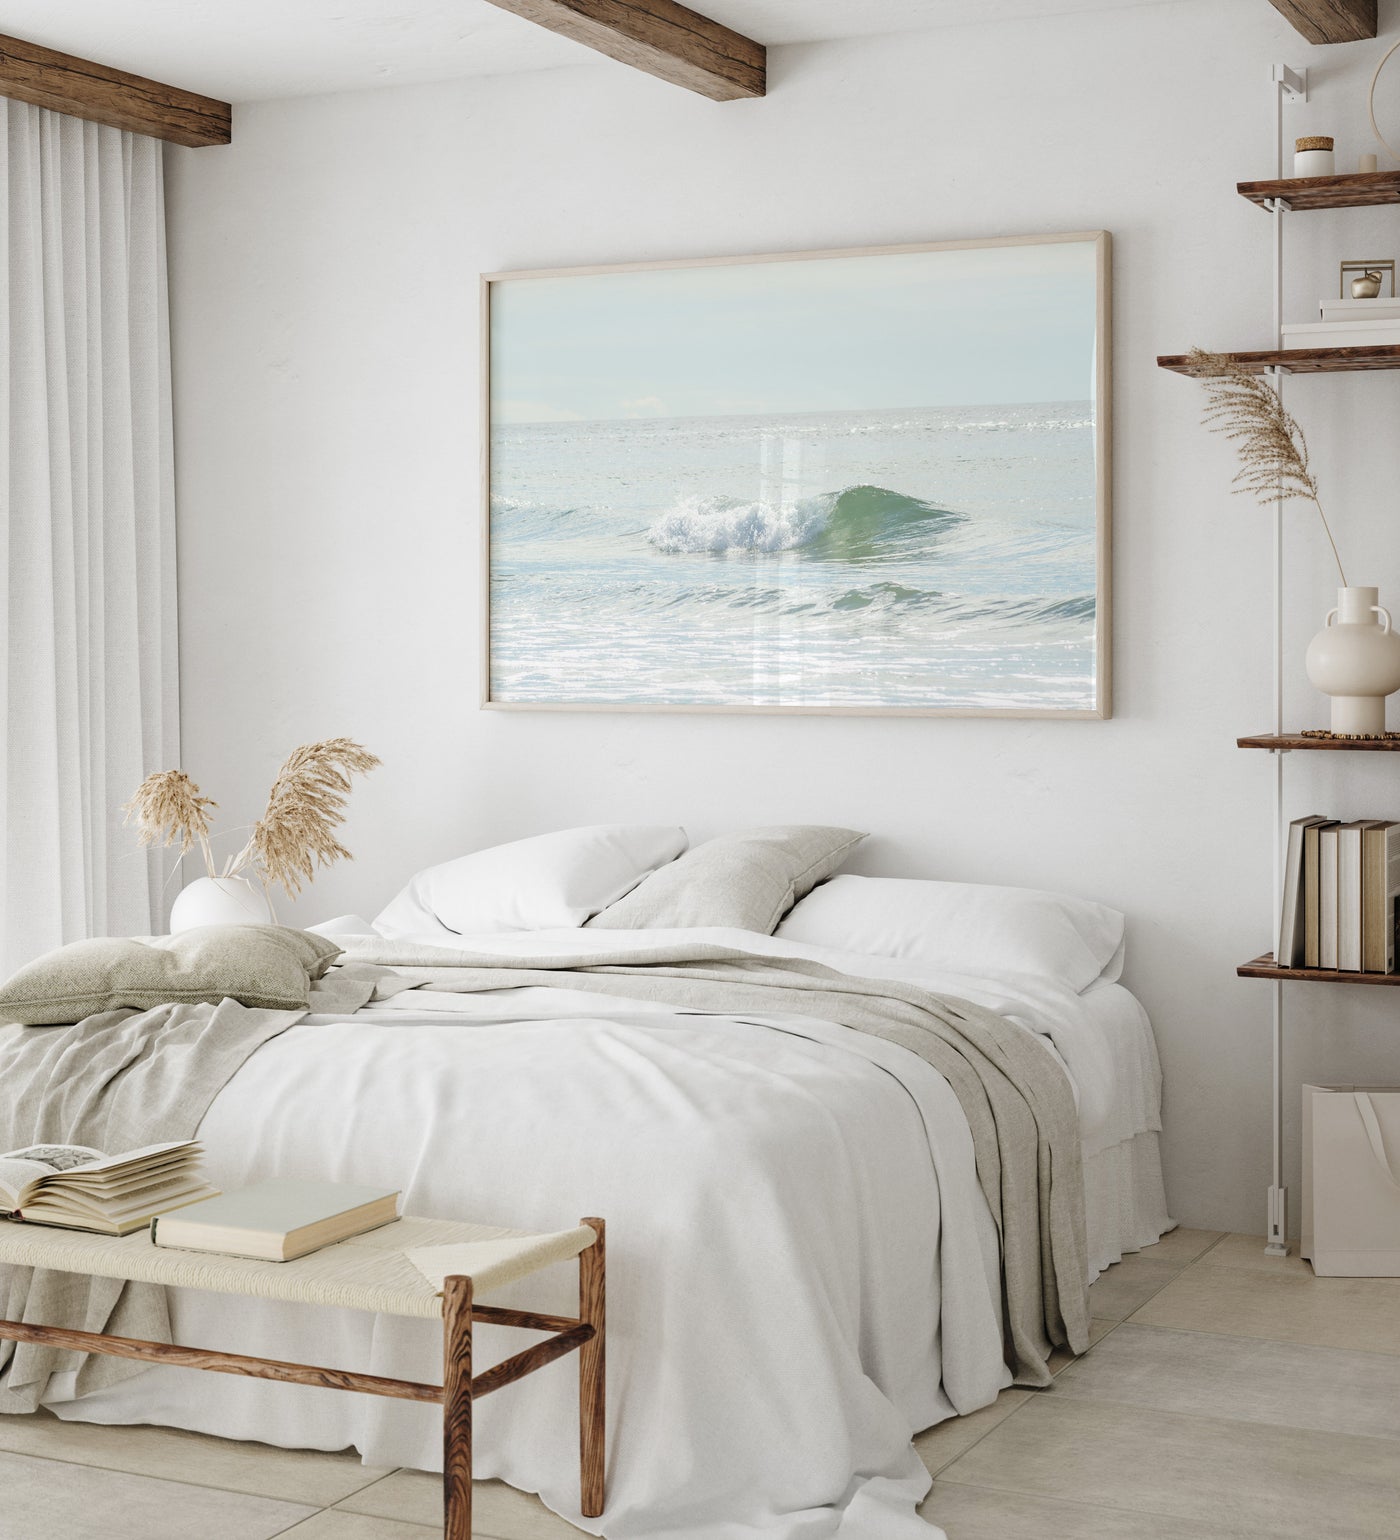 Ocean Waves No 13 - Fine art print by Cattie Coyle Photography in bedroom